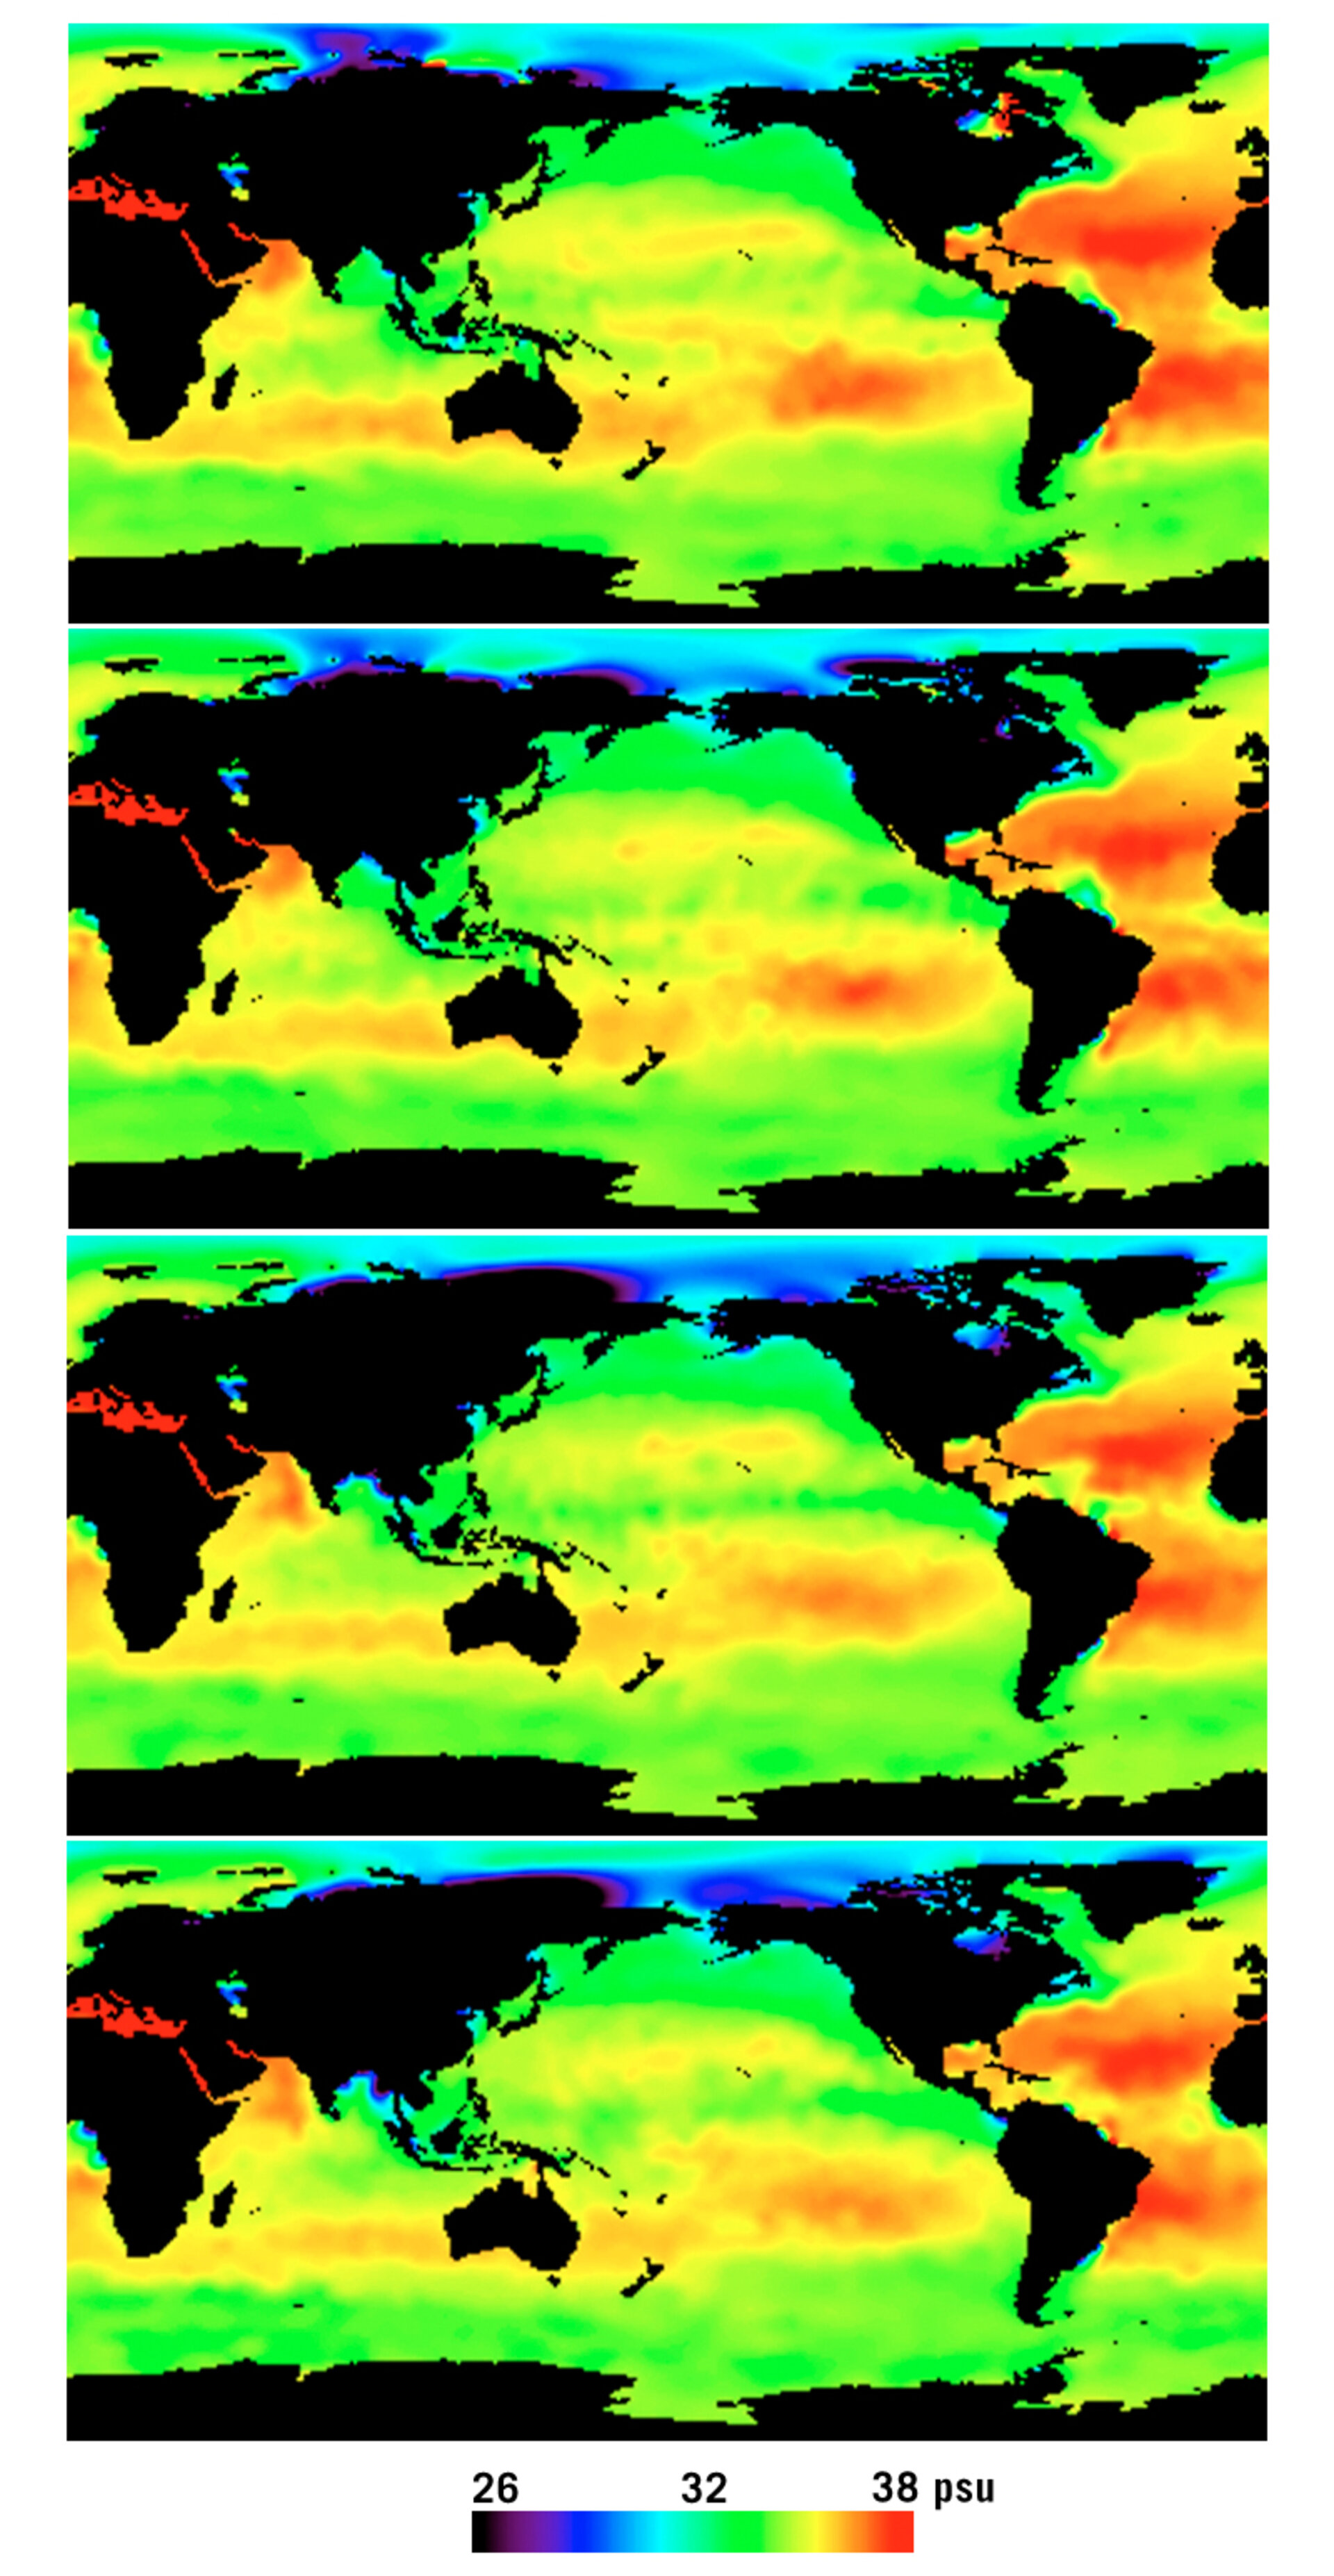 Simulated seasonal sea-surface salinty maps.